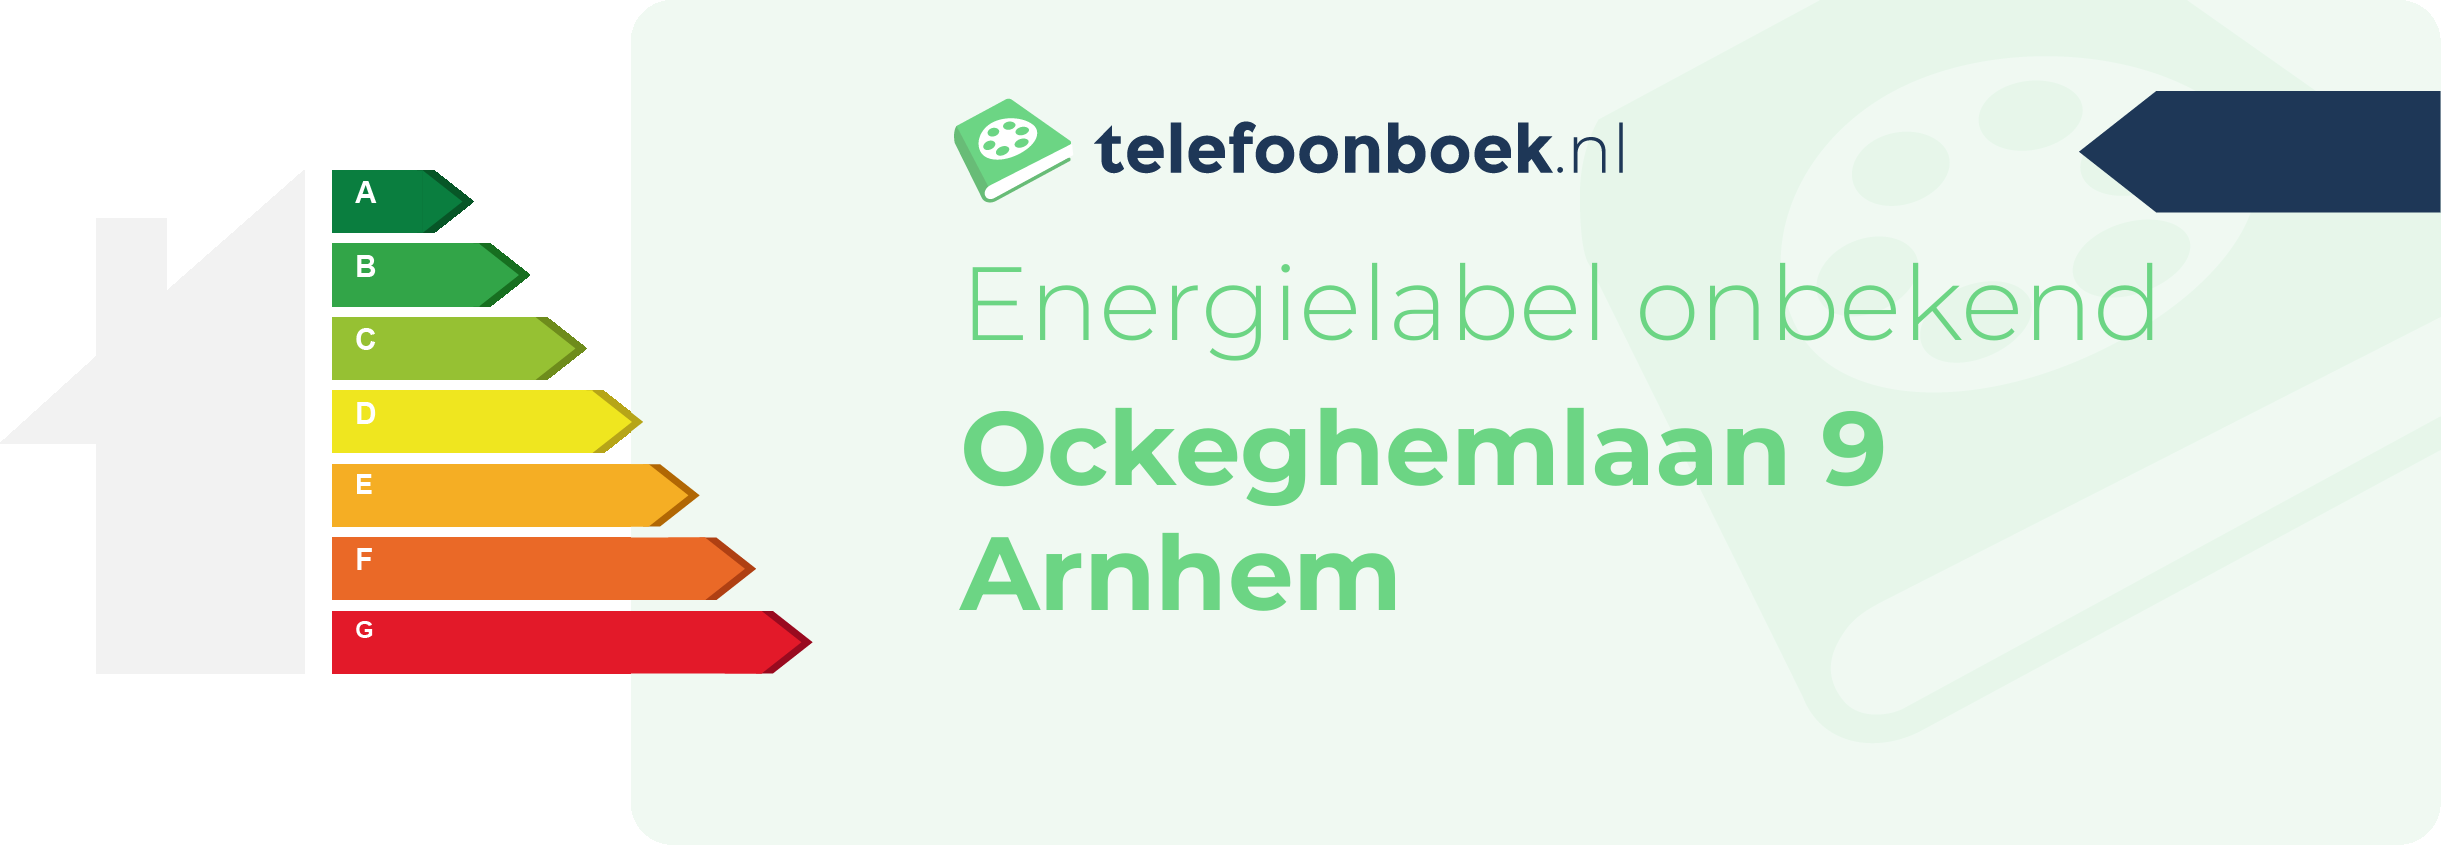 Energielabel Ockeghemlaan 9 Arnhem